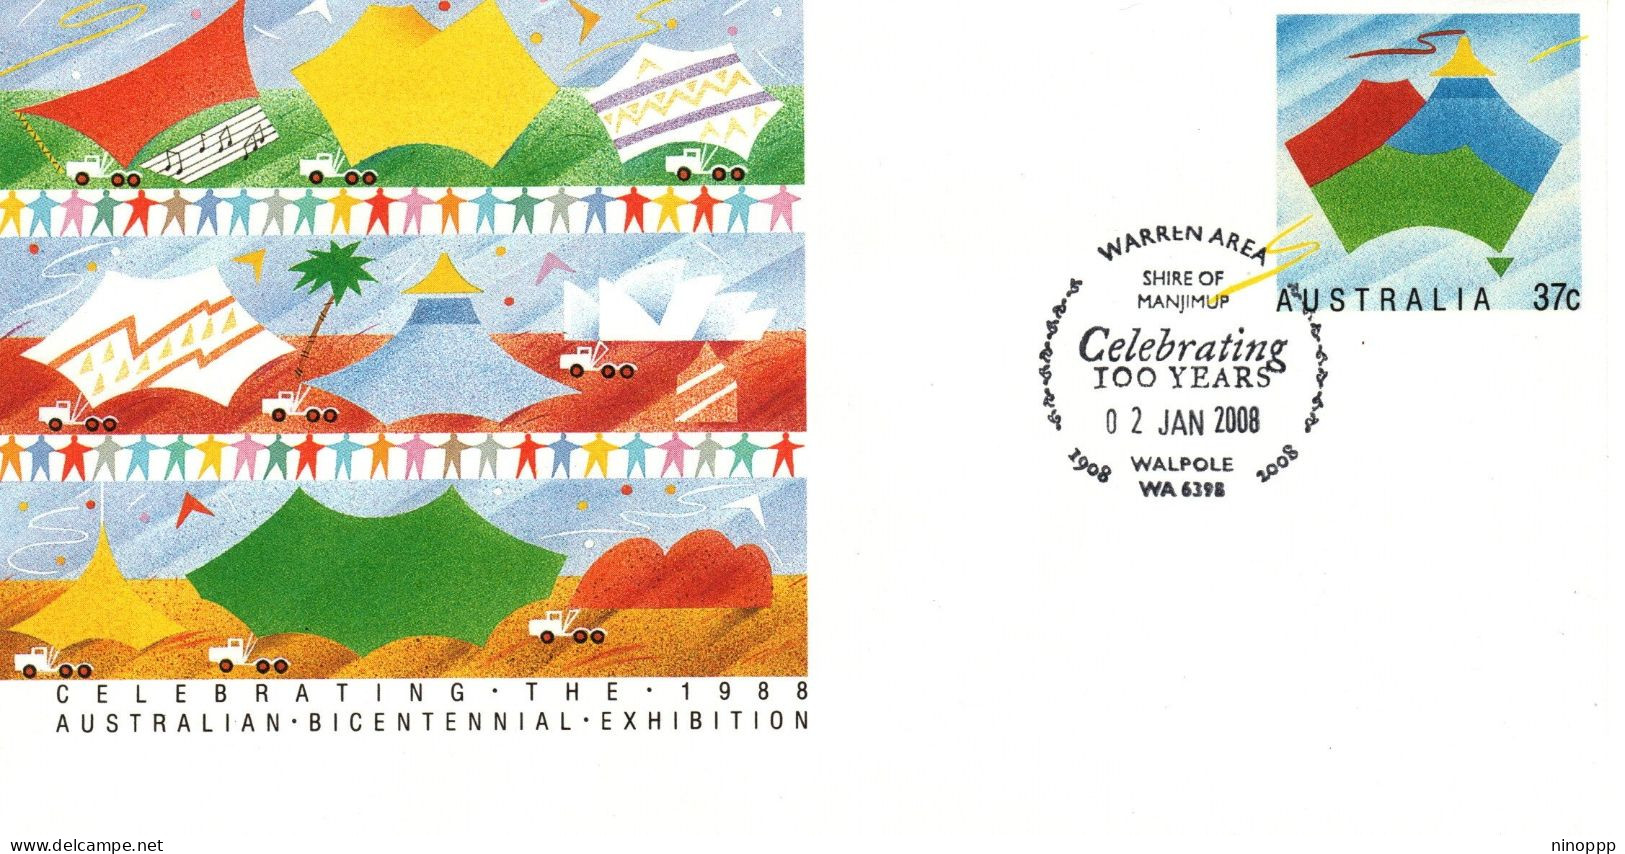 Australia 2008 ,Warren Area Celebrating 100 Years,Walpole Postmark,souvenir Cover - Marcofilie